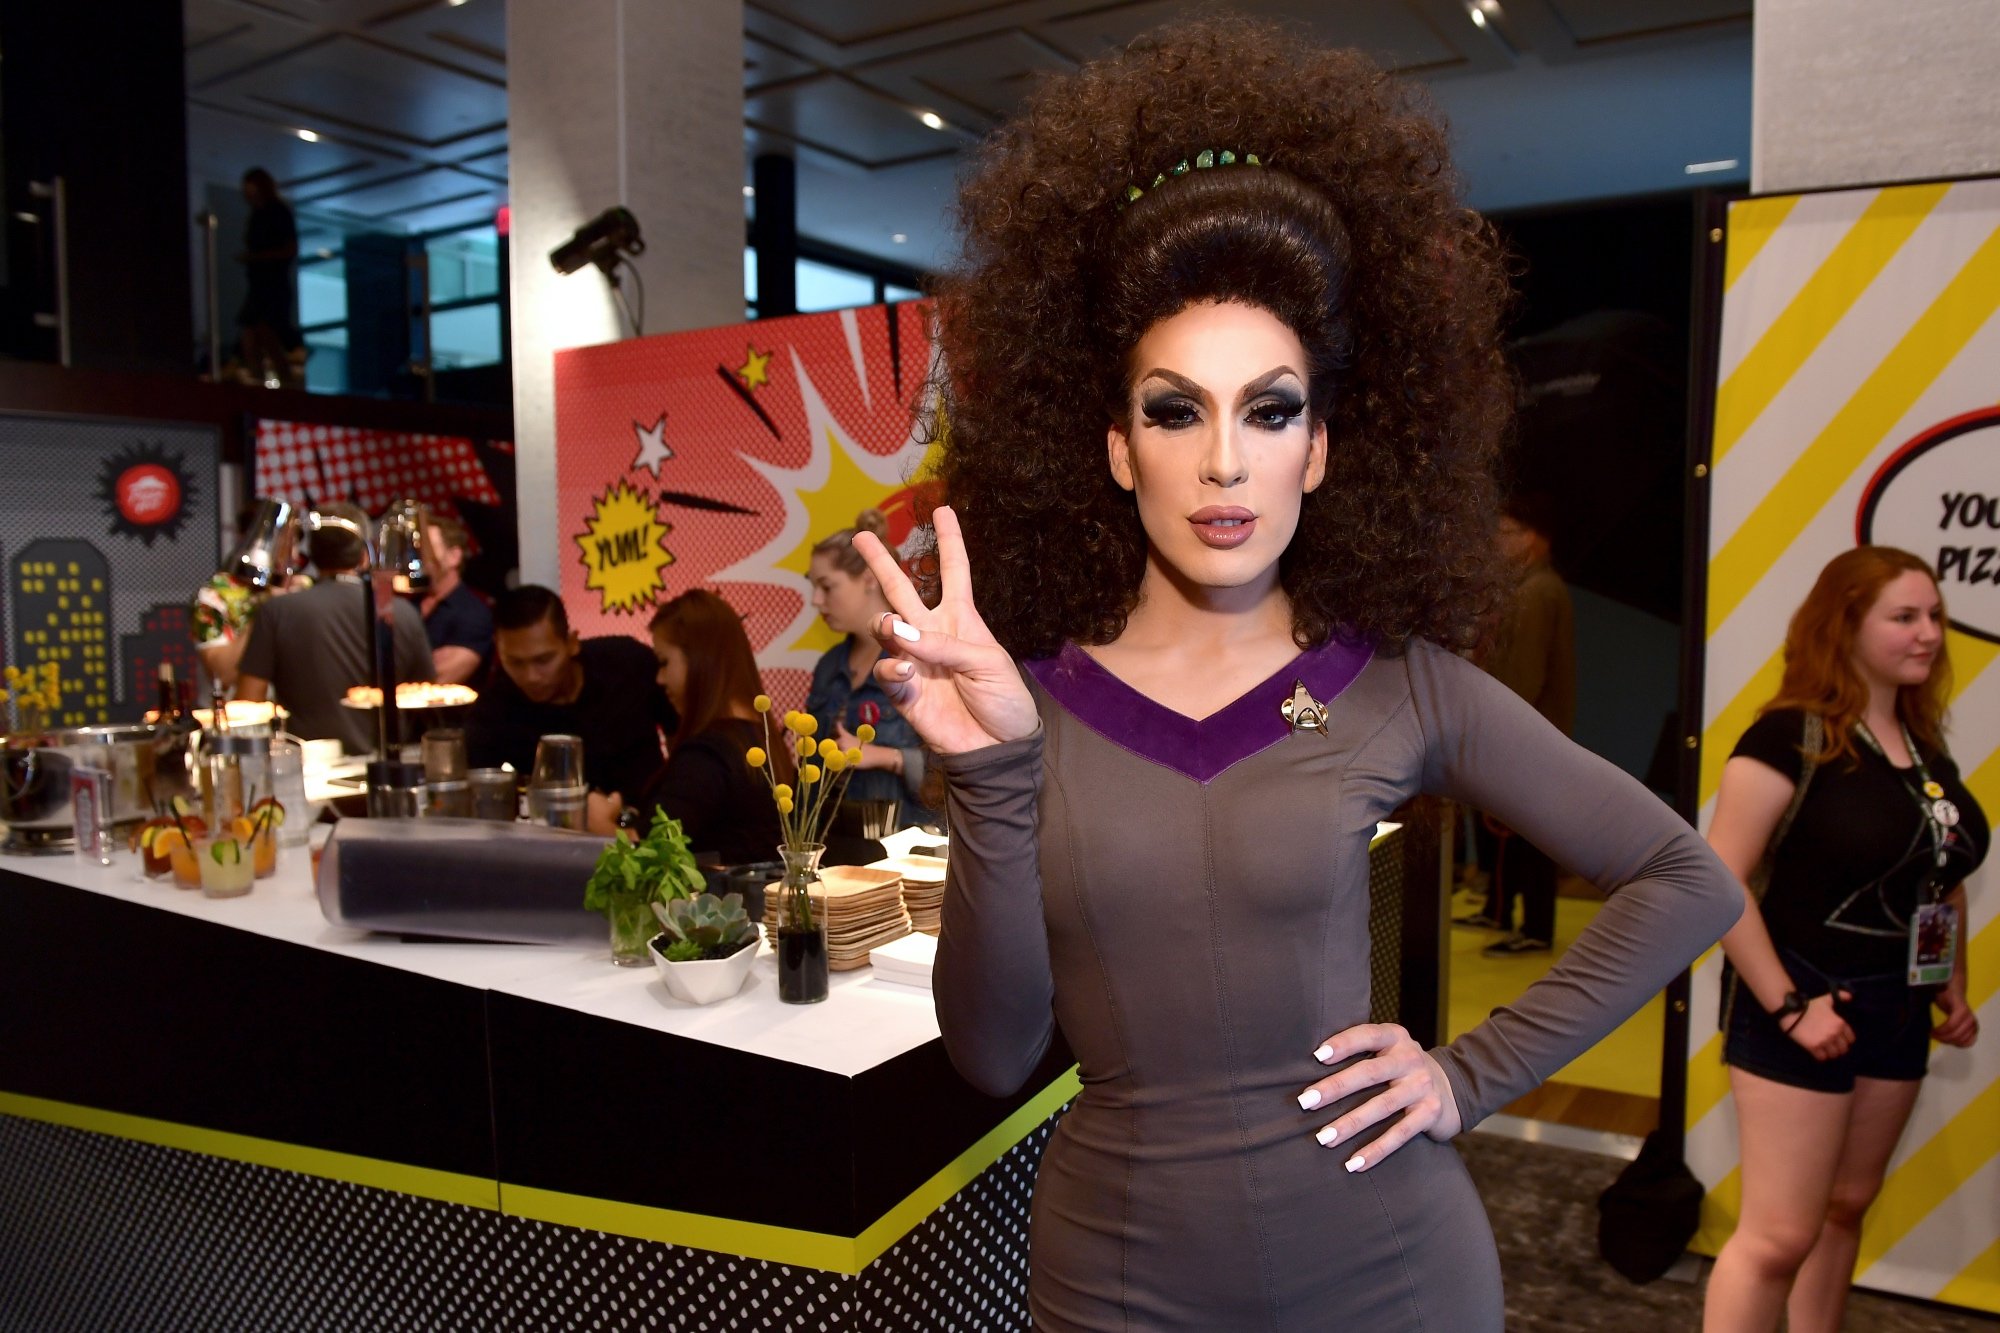 'RuPaul's Drag Race' Season 5 drag queen Alaska holding up a peace sign at Comic-Con